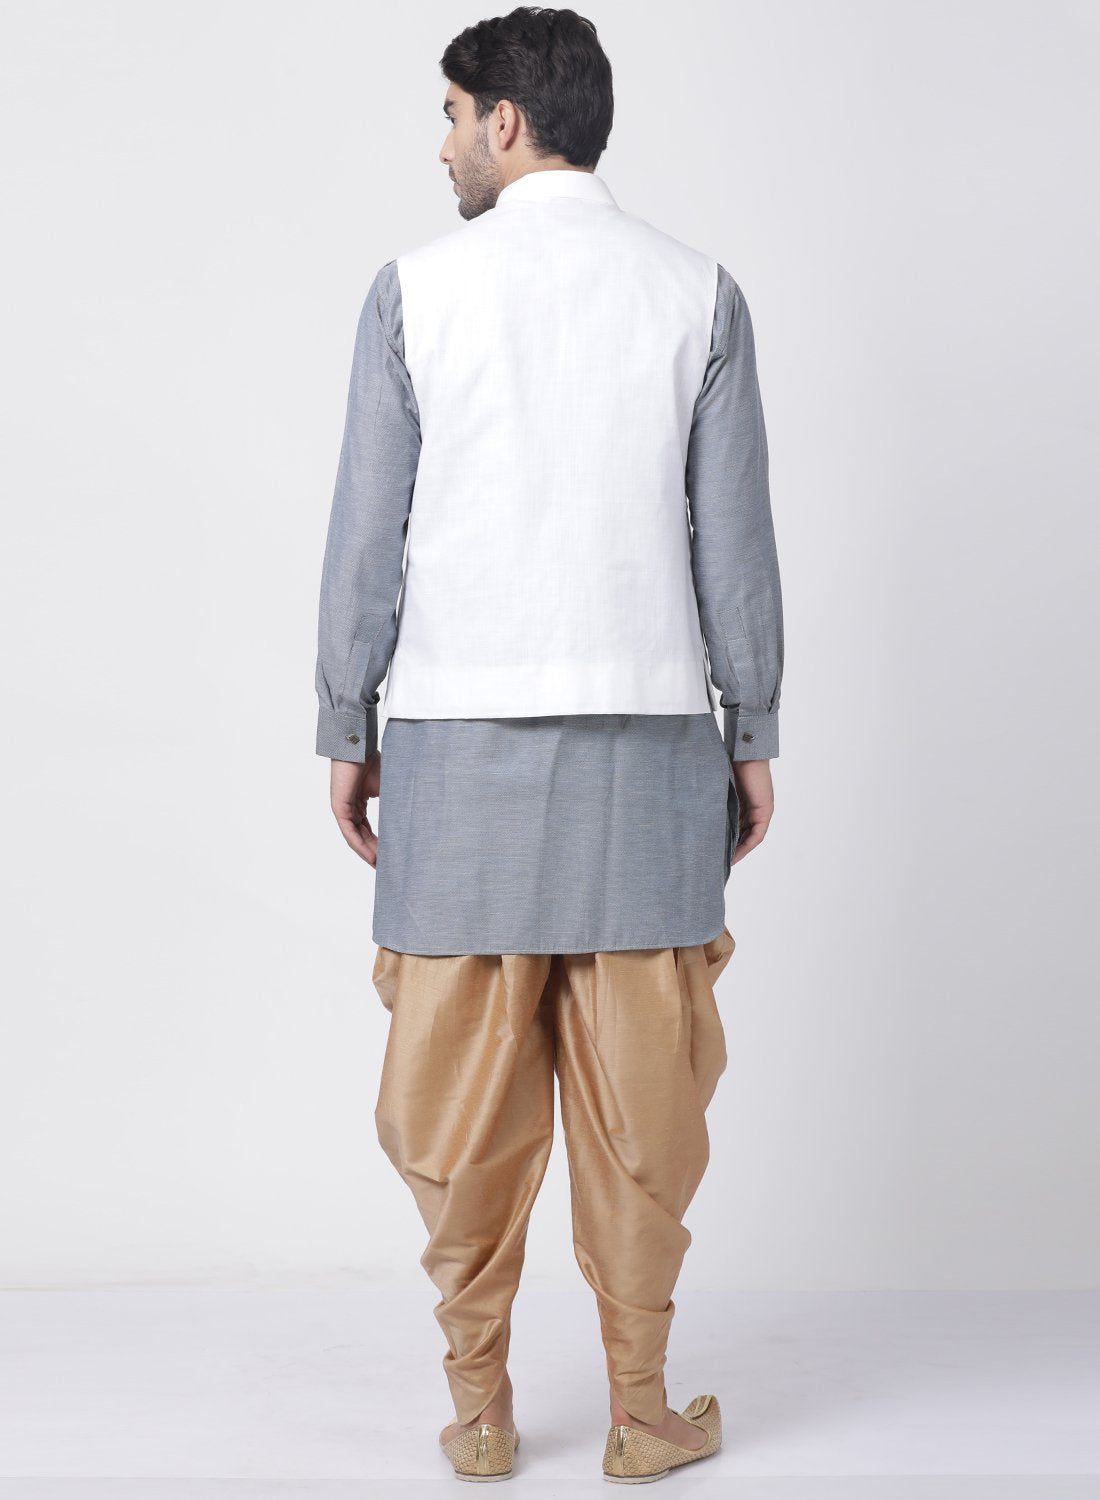 Men's Grey Cotton Blend Ethnic Jacket, Kurta and Dhoti Pant Set